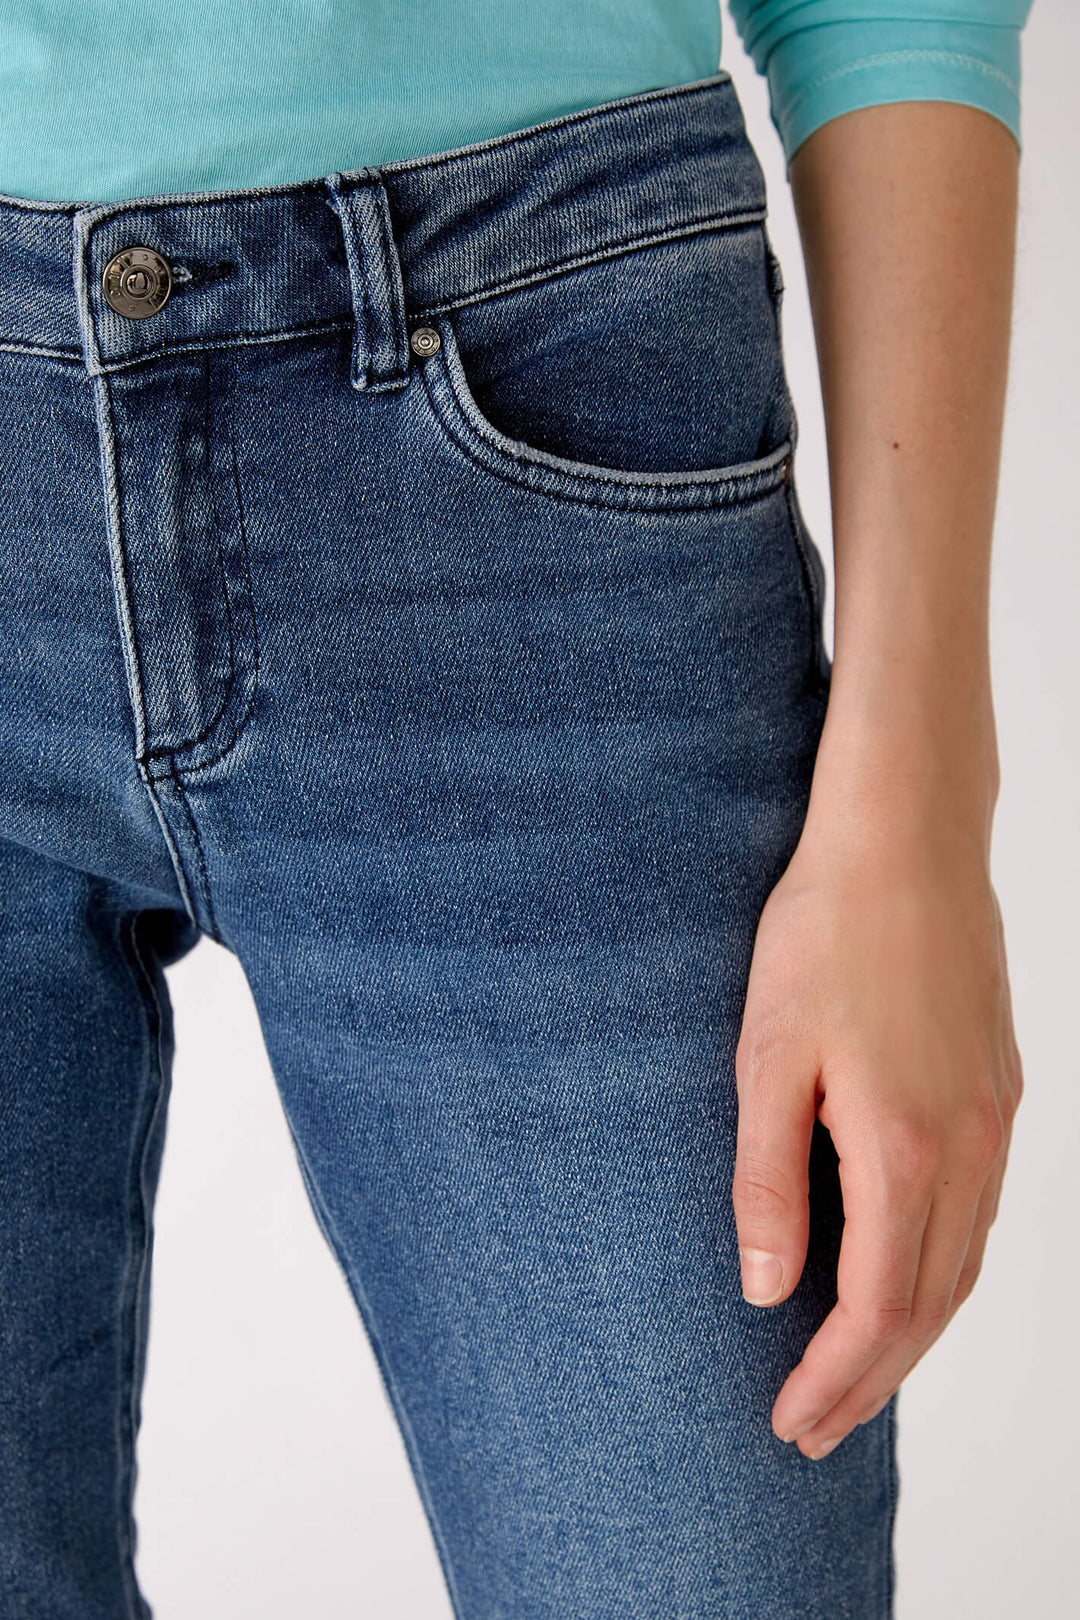 Oui 76130 Dark Blue Denim Jeans - Olivia Grace Fashion